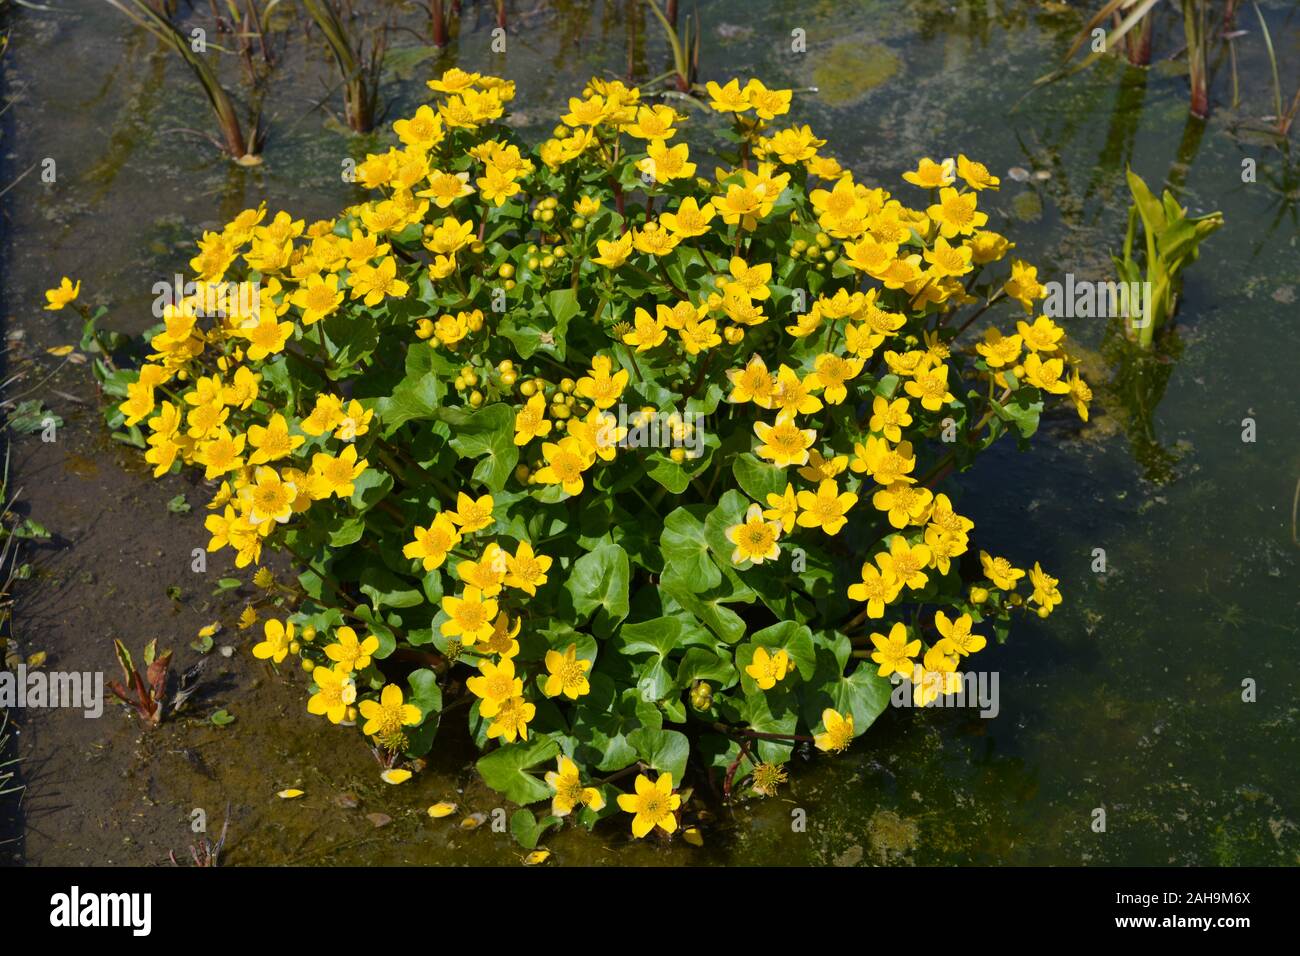 Caltha Palustris or Marsh Marigold, flowering in a garden pond Stock Photo